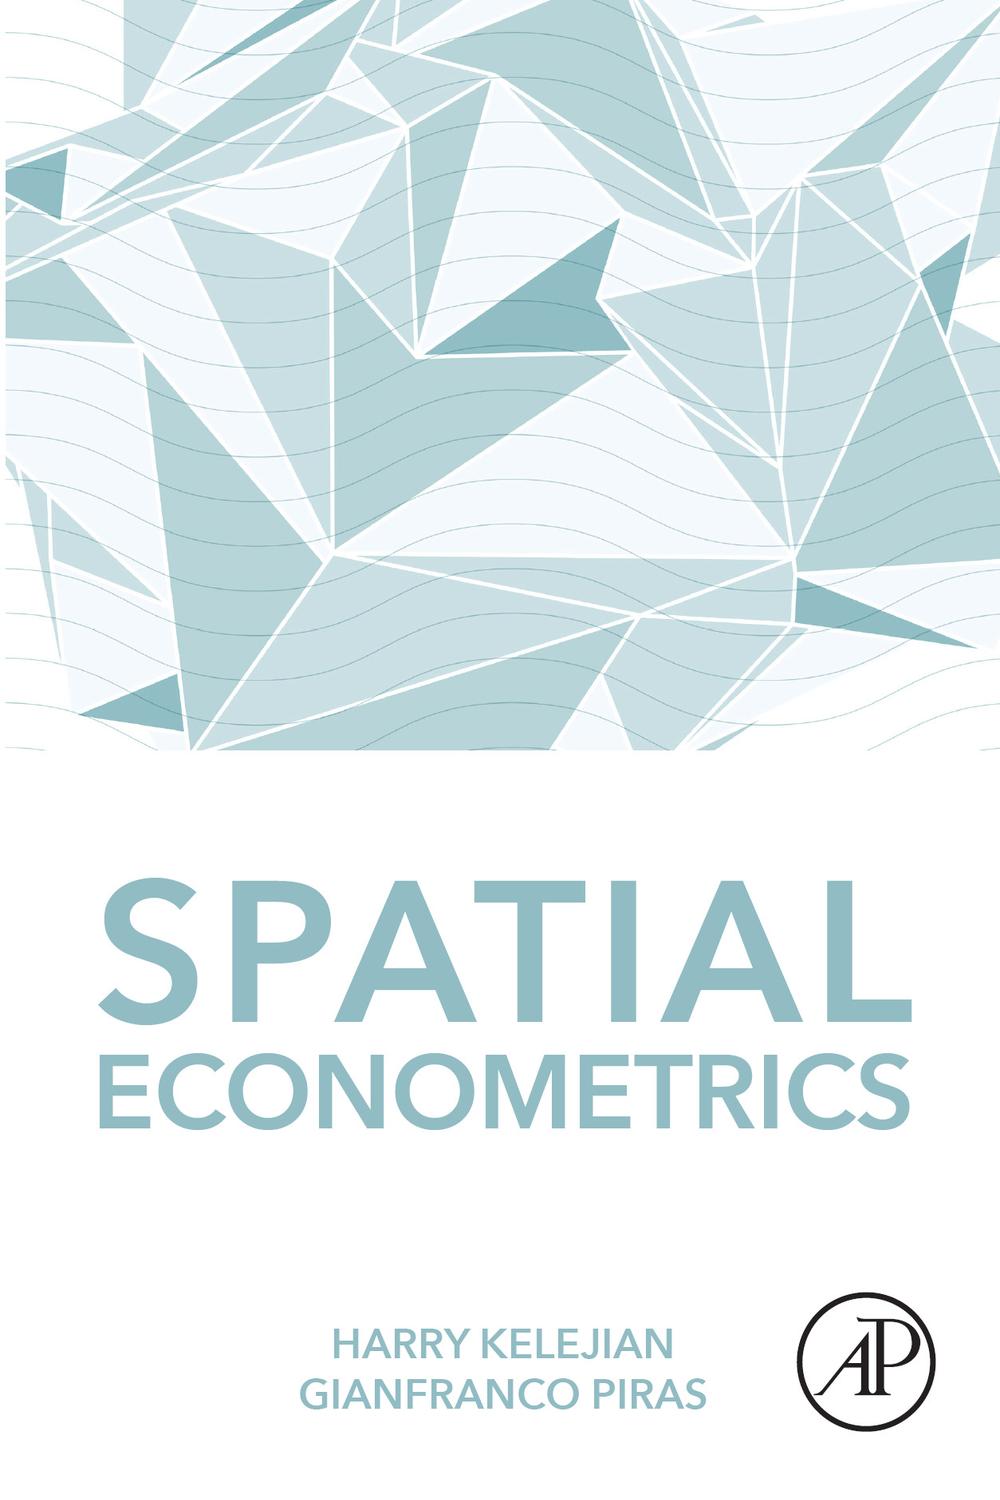 Spatial Econometrics - Harry Kelejian, Gianfranco Piras